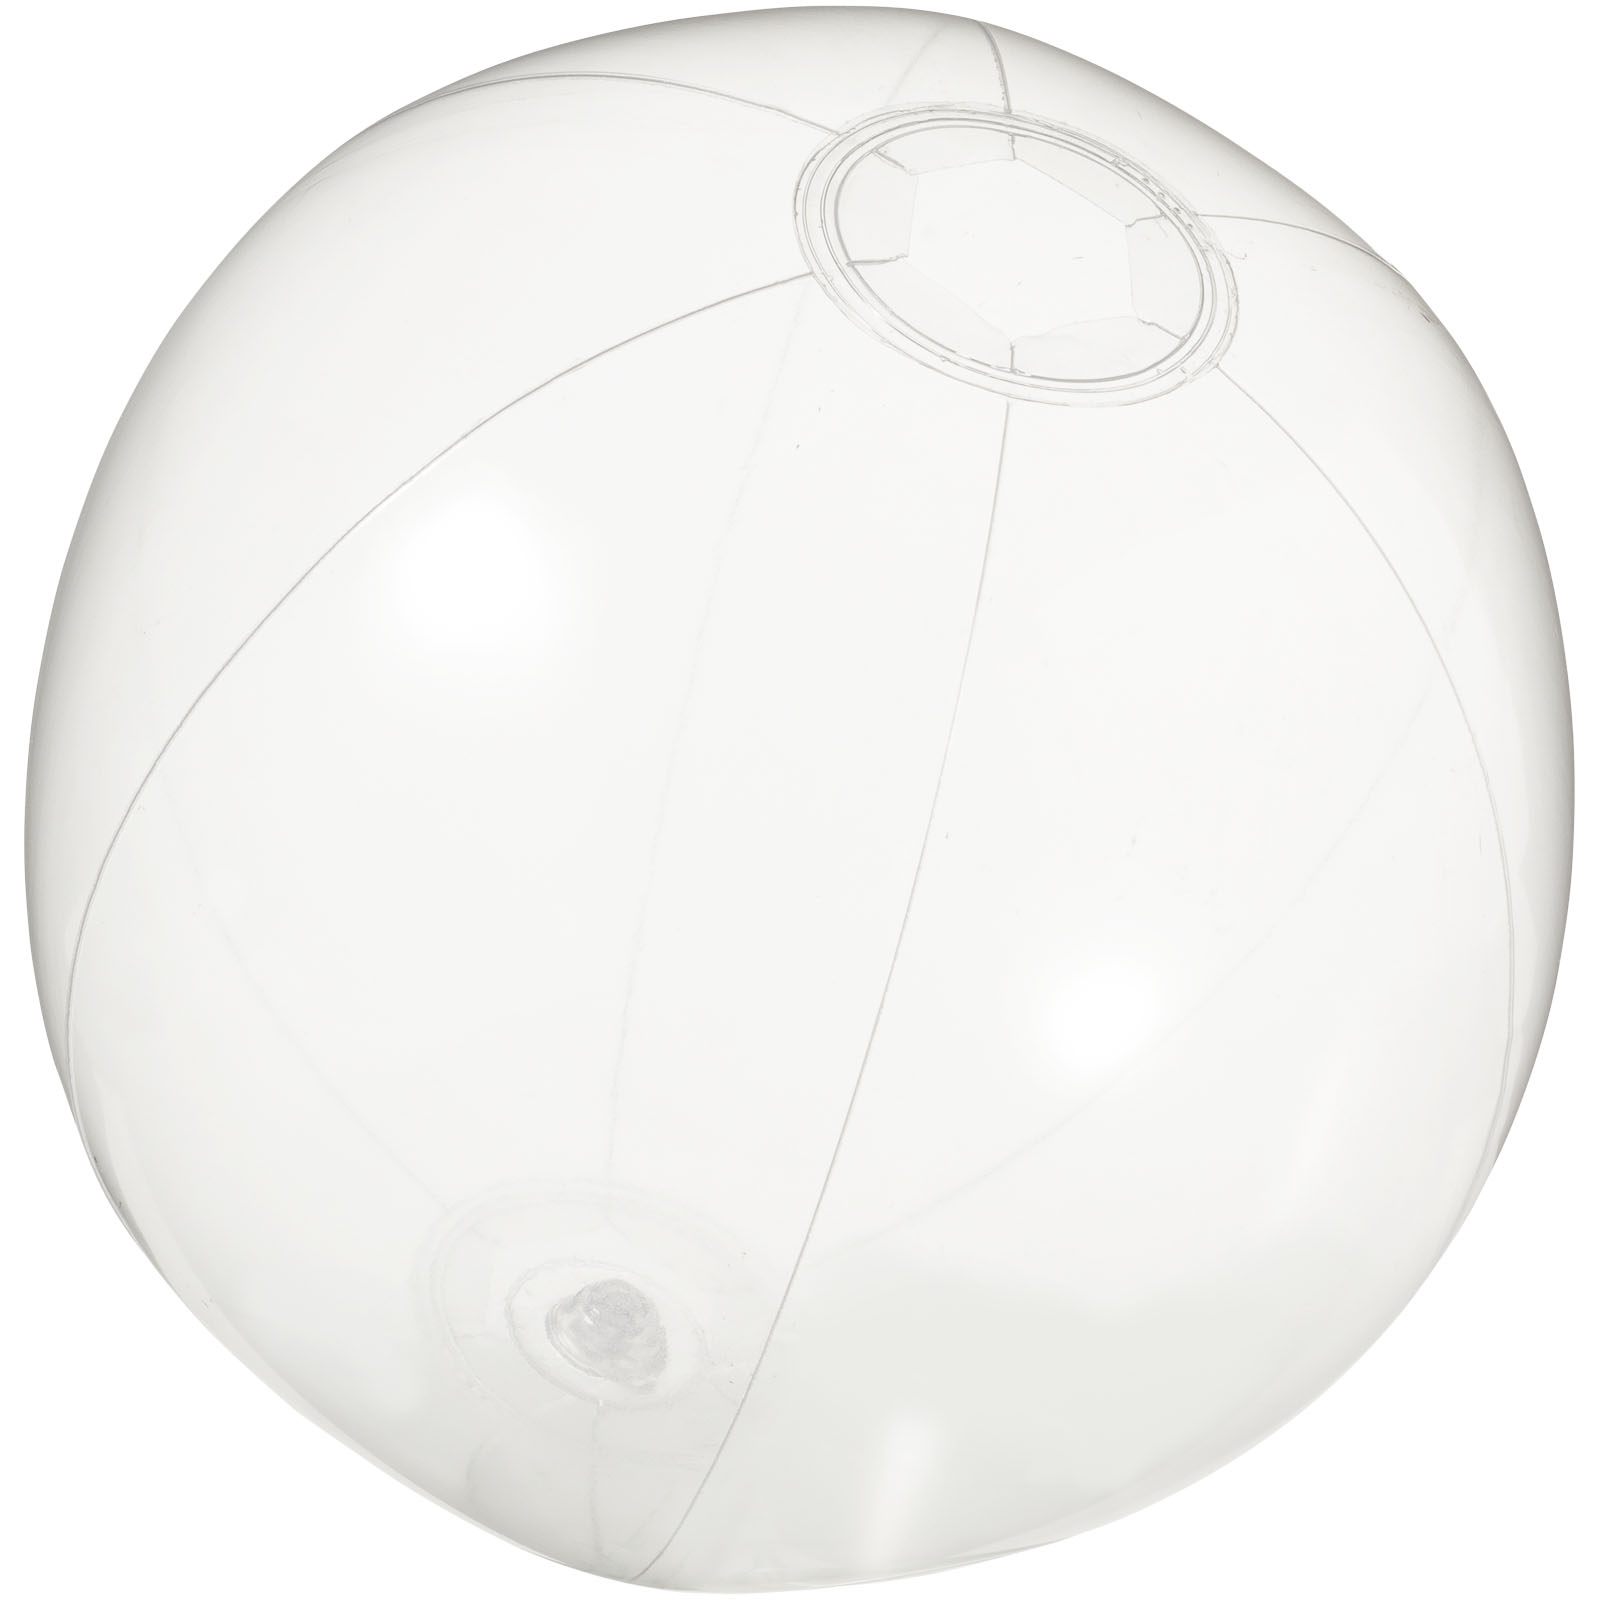 Transparent Inflatable Beach Ball - Fenny Compton - Melton Mowbray